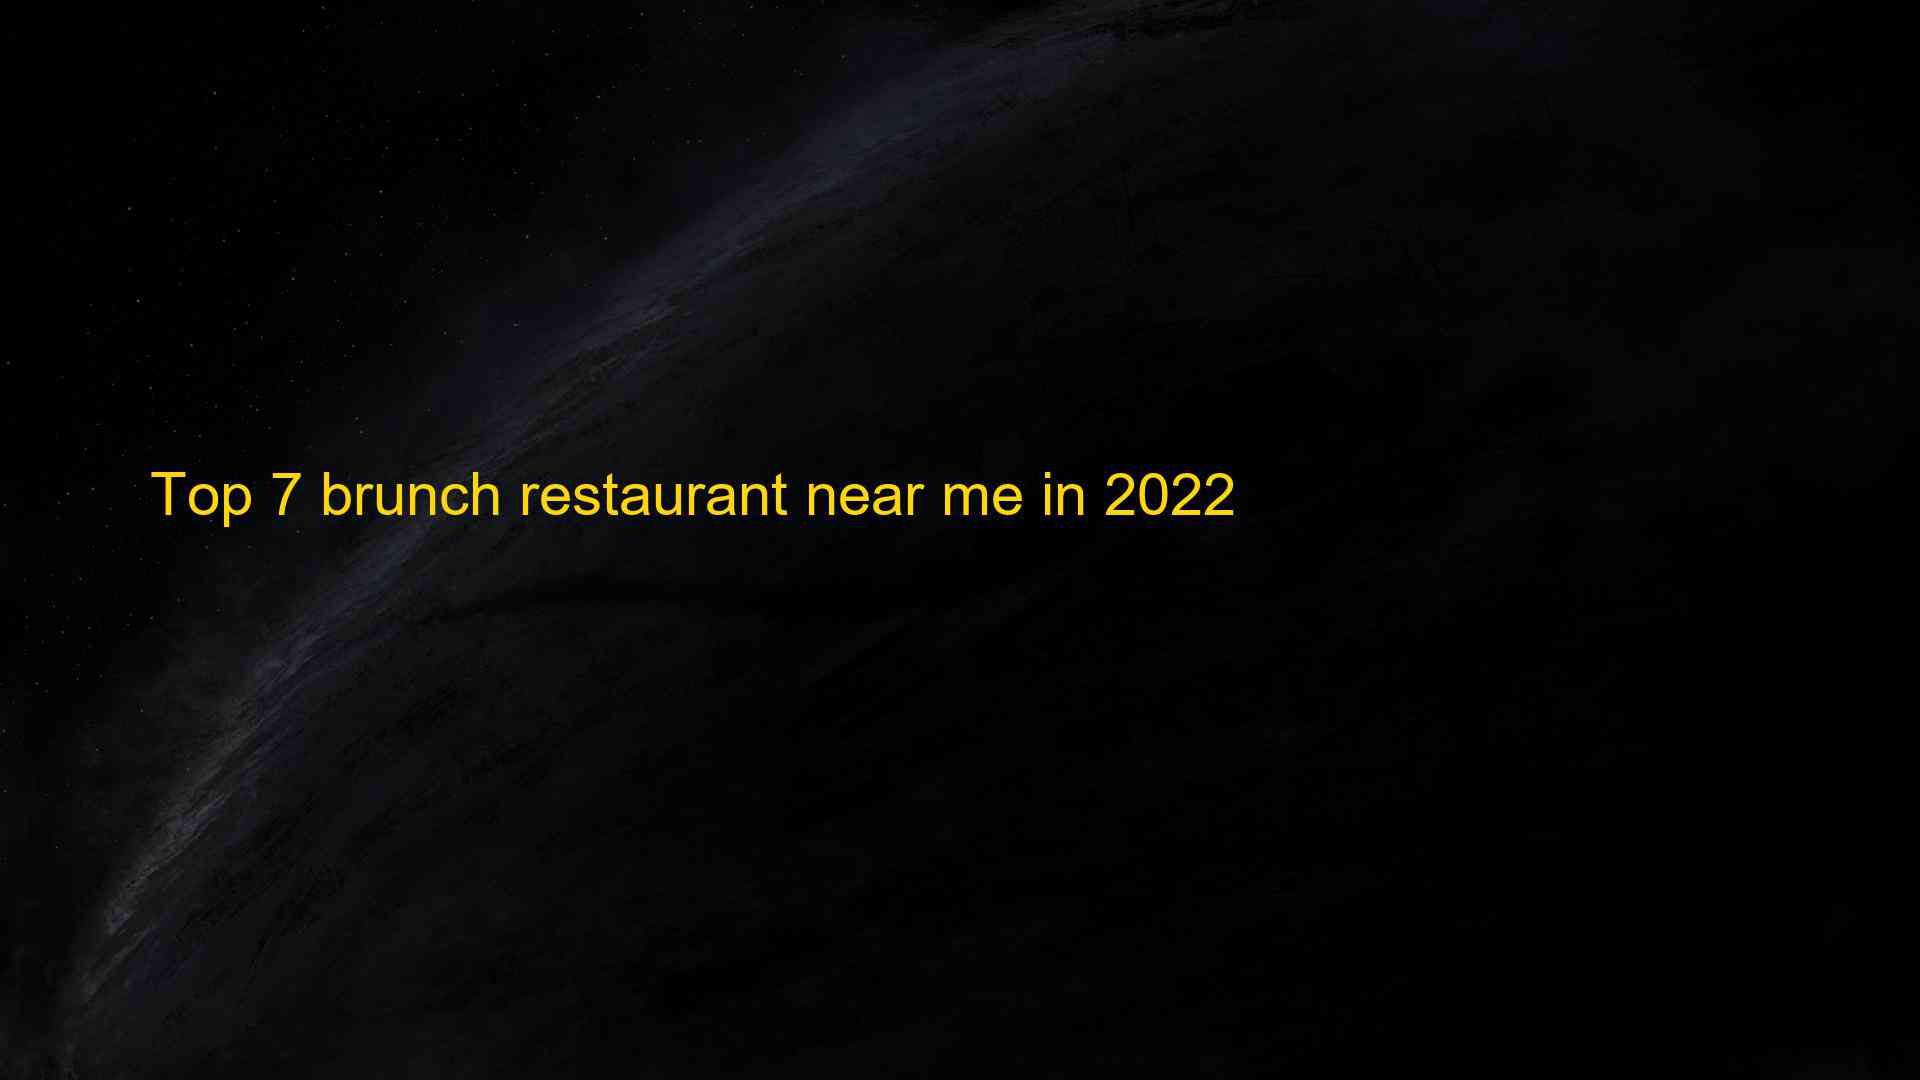 Top 7 brunch restaurant near me in 2022 1662898100